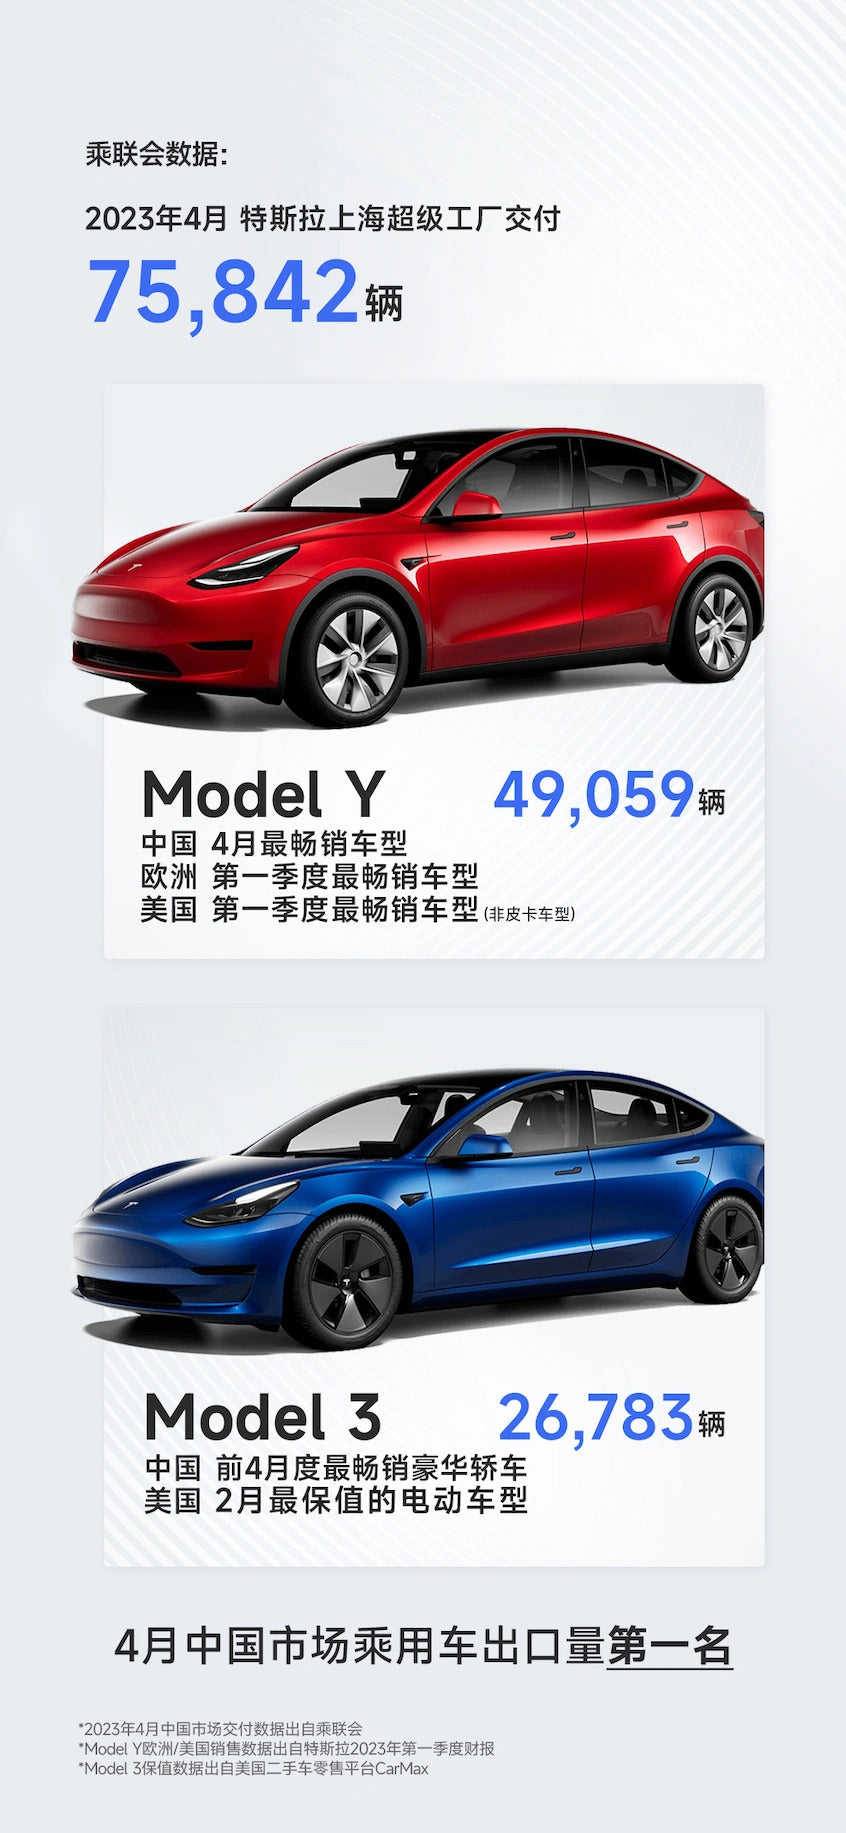 Tesla Giga Shanghai delivers over 75,000 units in April – TOPCARS